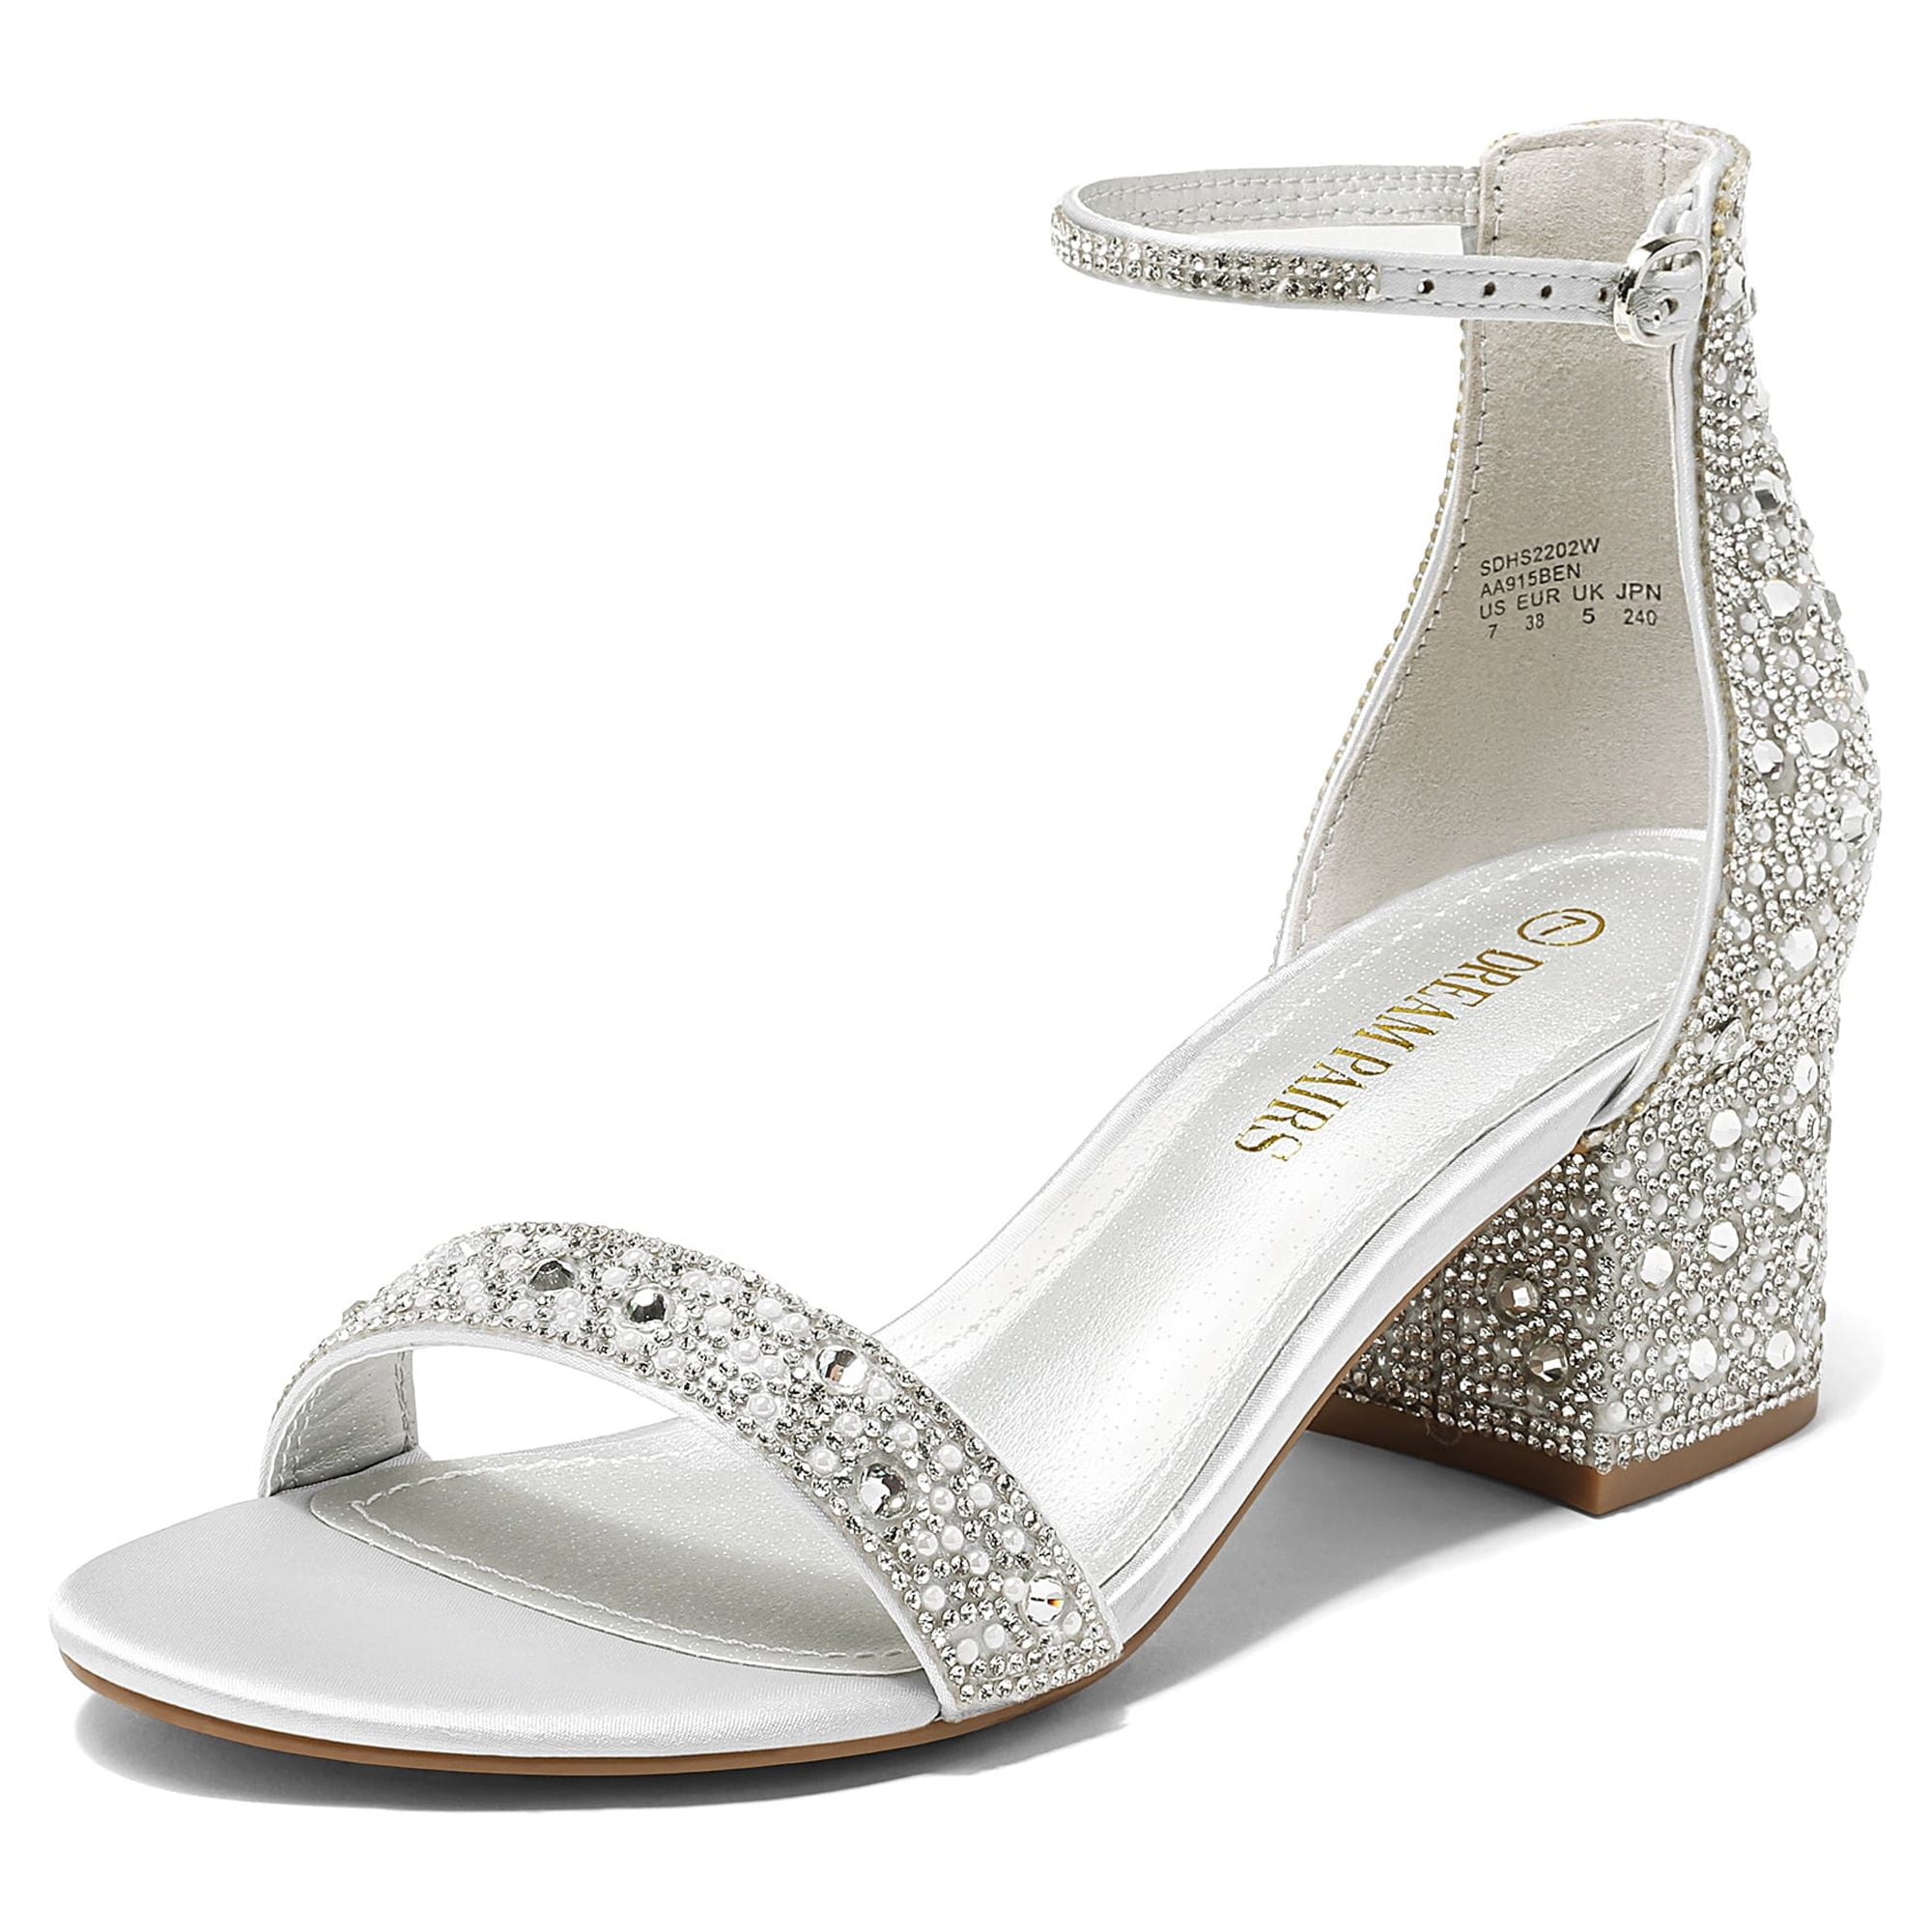 I. Miller Beautiful Silver Glitter Heels Shoes Ankle Straps Women's Size 10  M | eBay